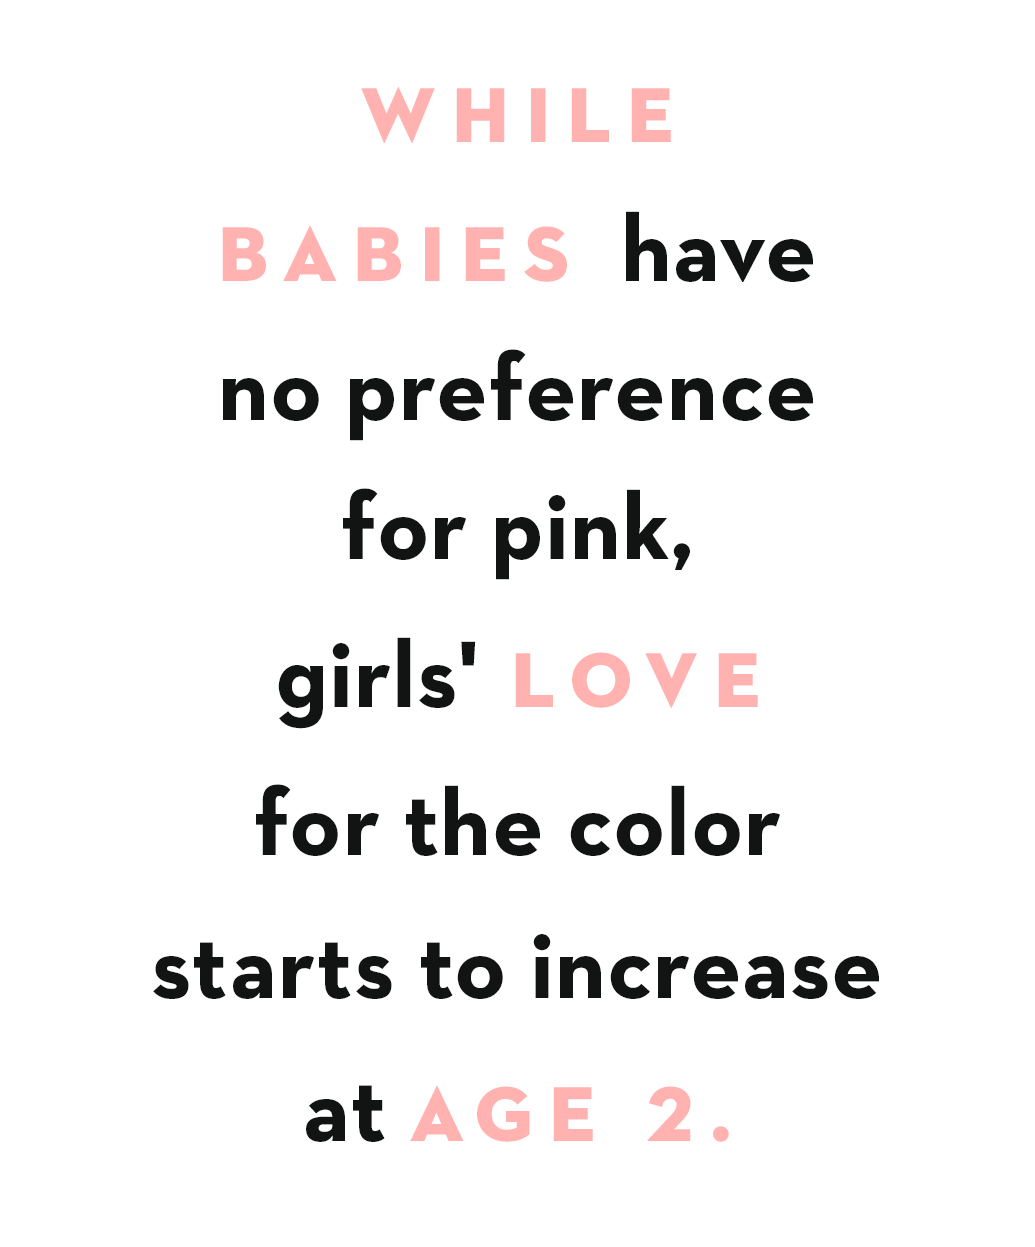 Do girls really prefer pink?